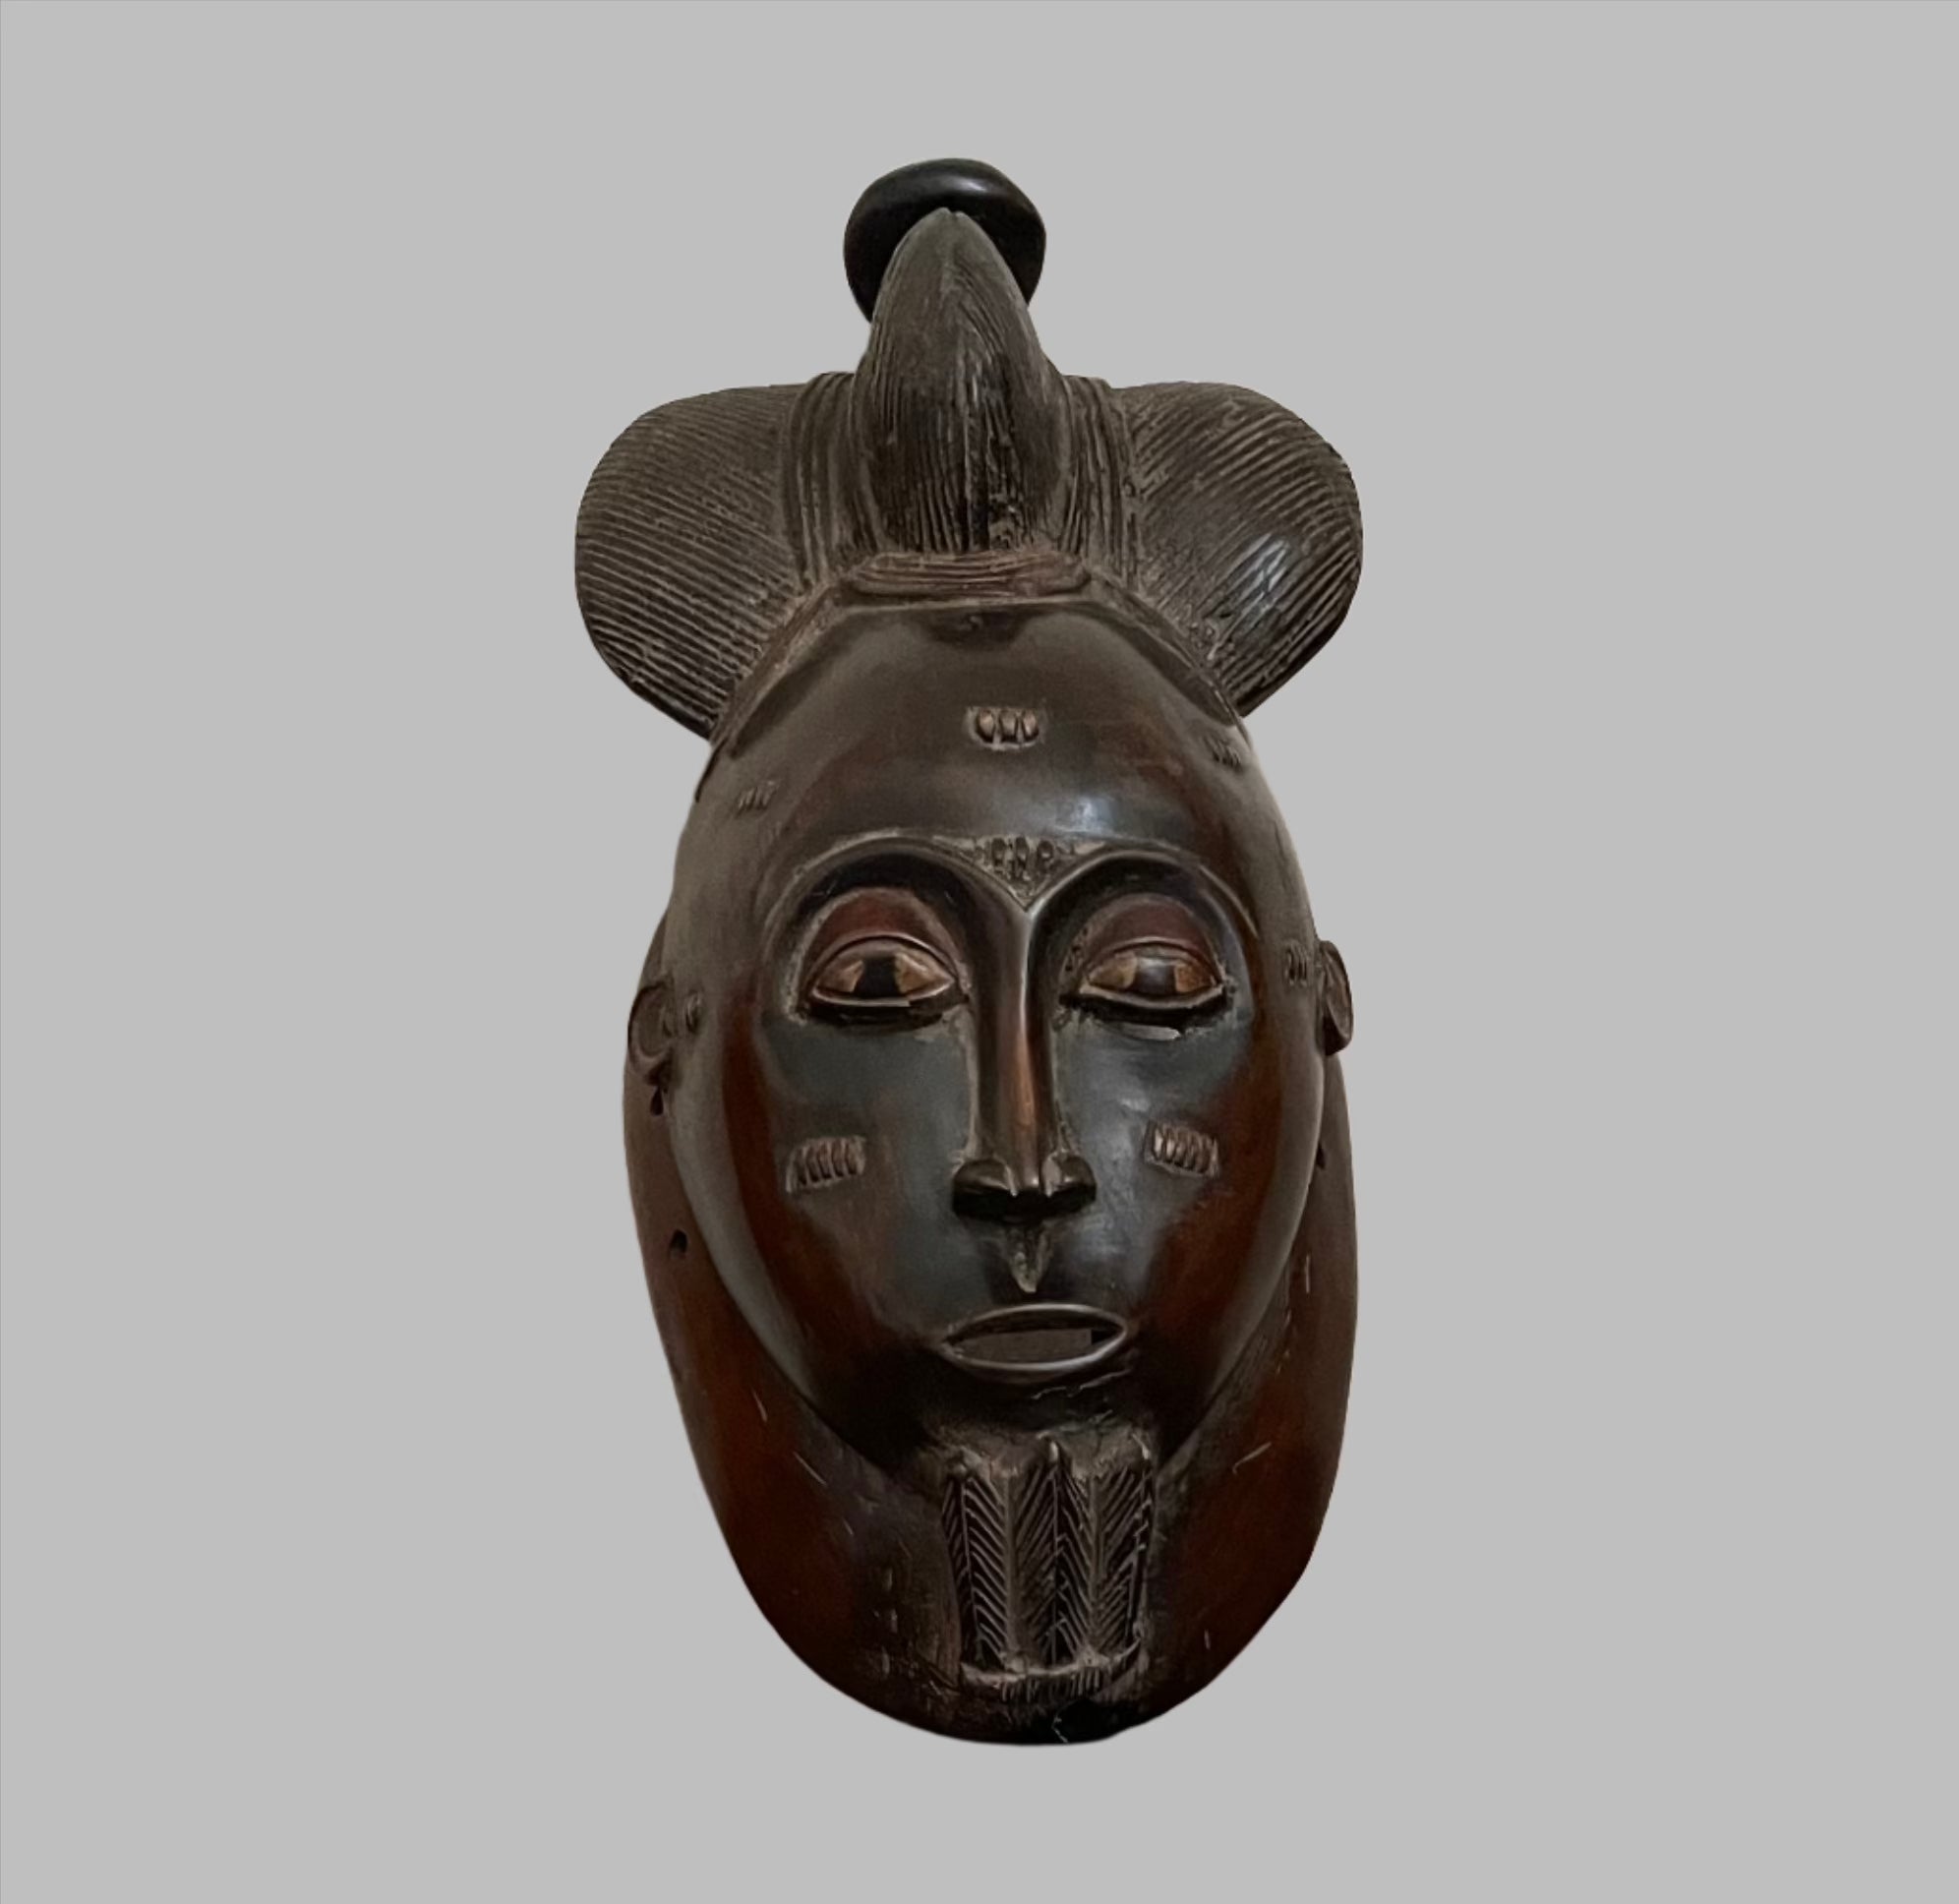 Masks - African Art; Handcrafted; Handmade;Baule Mask Carved Wood, Wall Decor African Mask